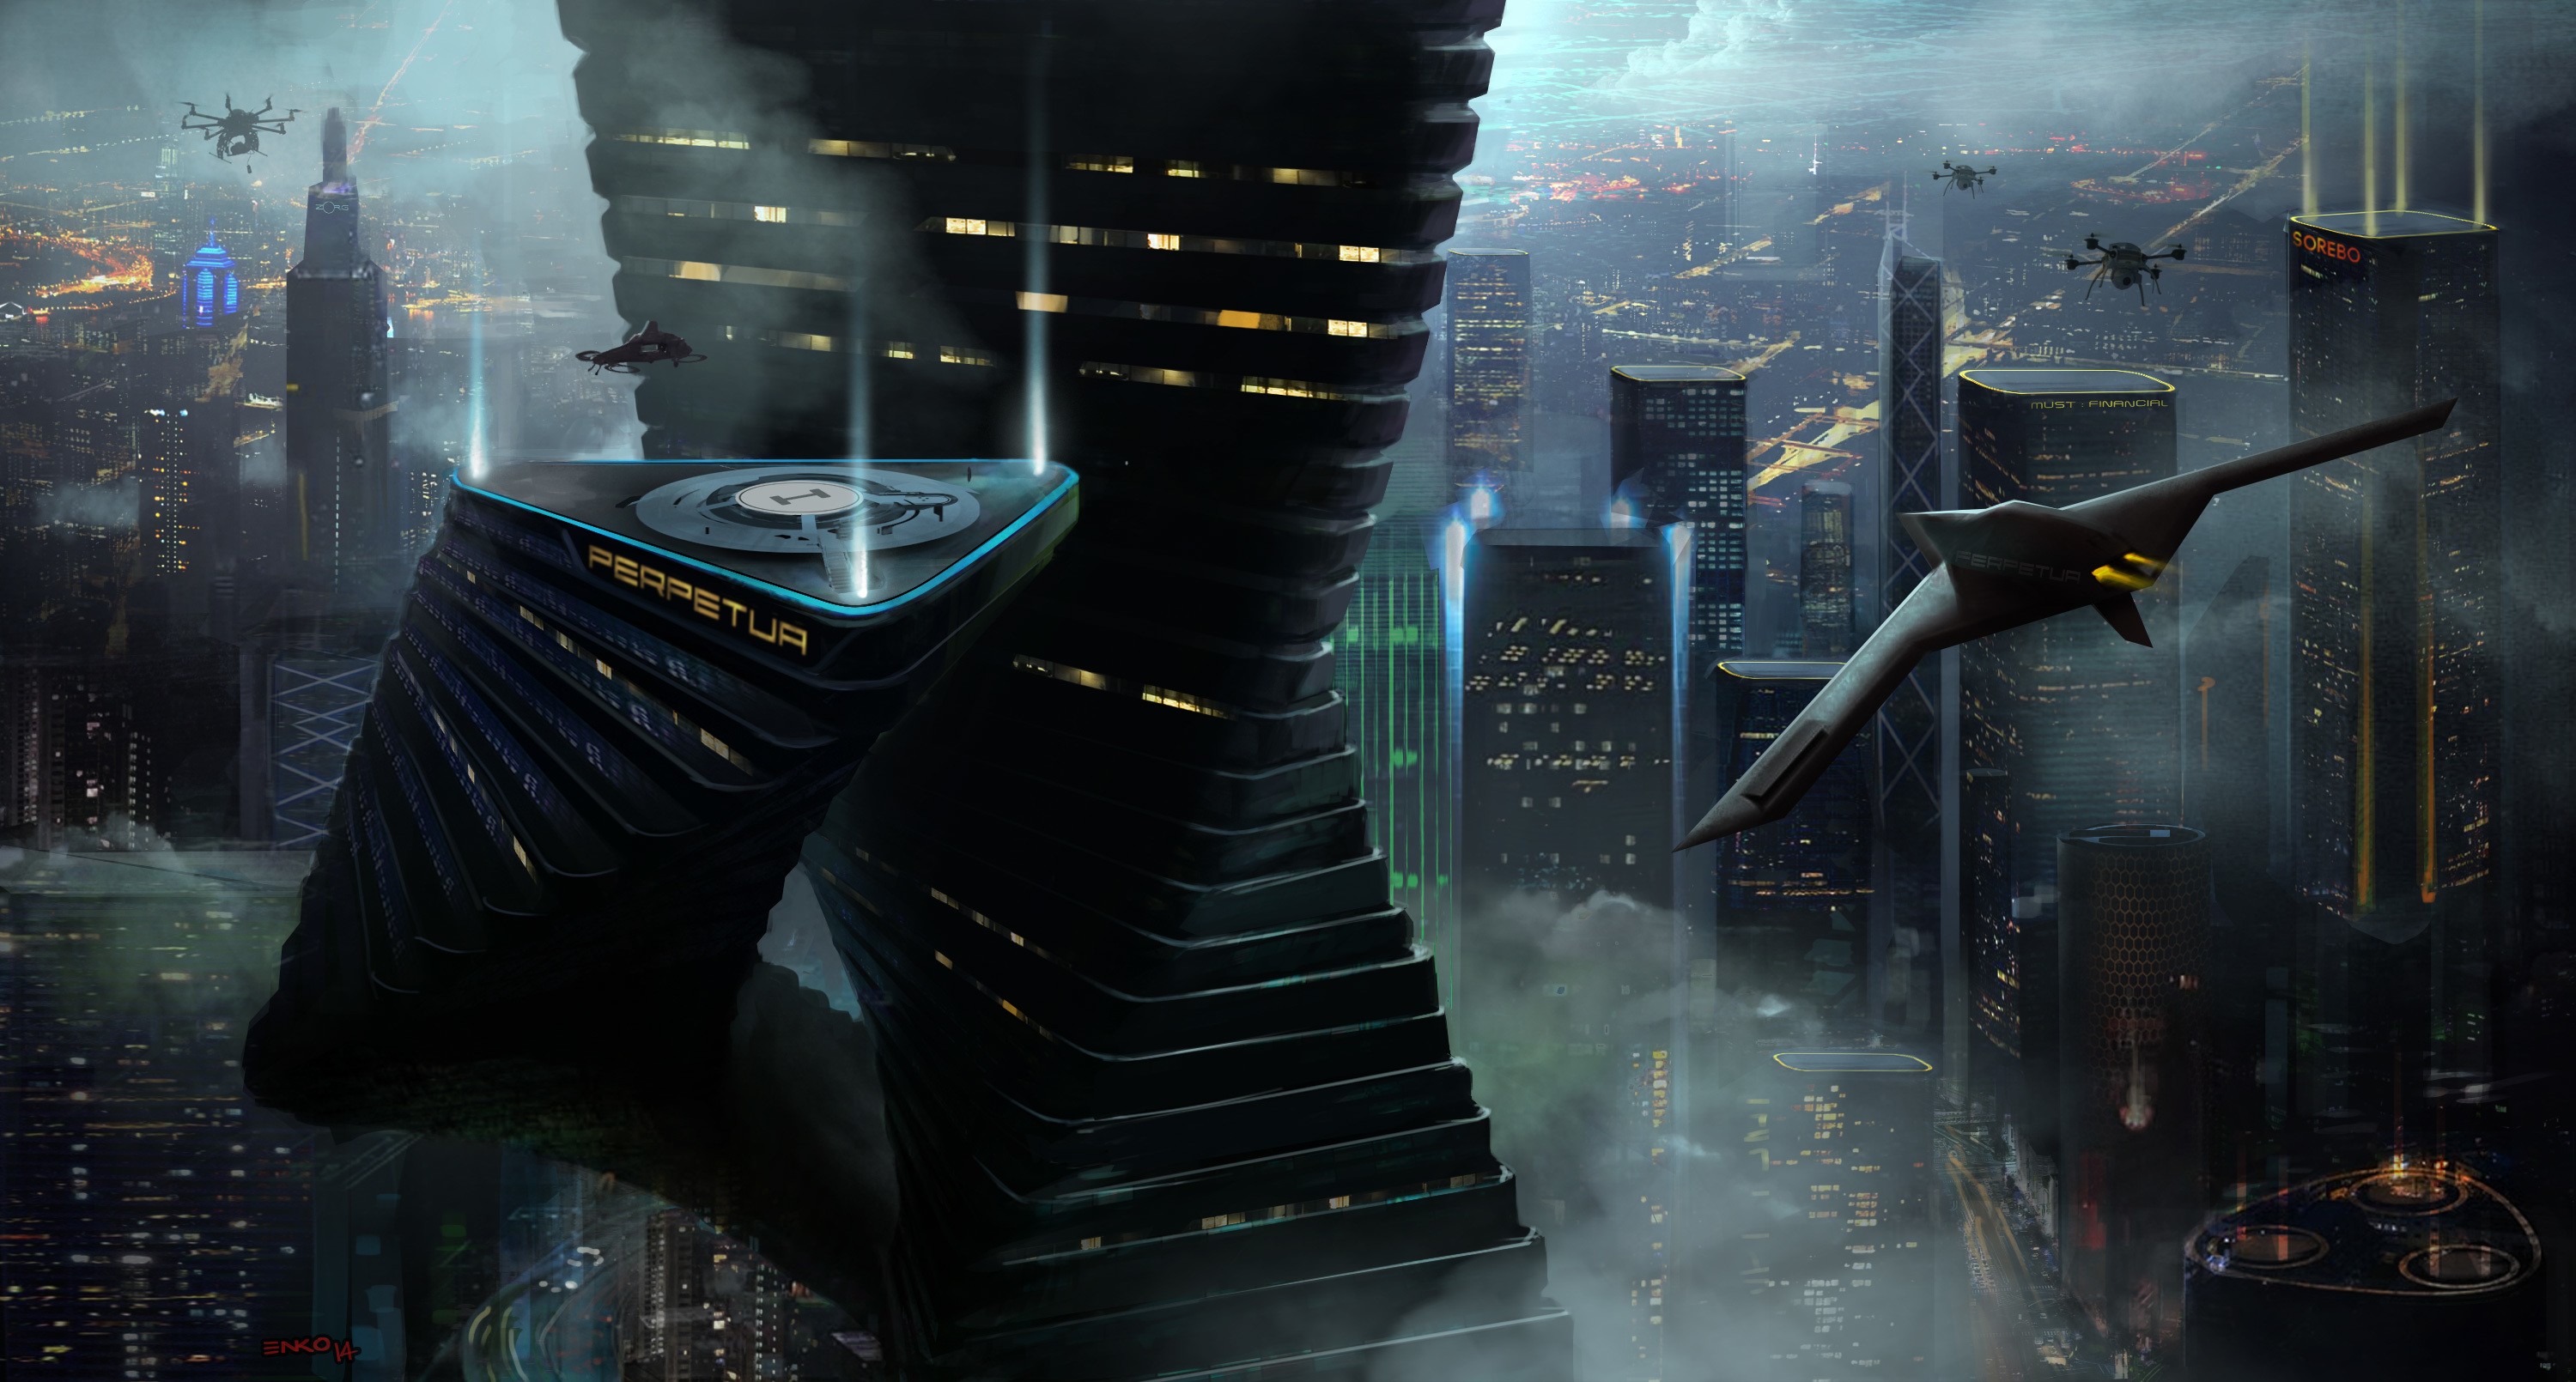 General 3000x1610 digital art drawing cityscape airplane skyscraper building lights drone futuristic science fiction futuristic city vehicle